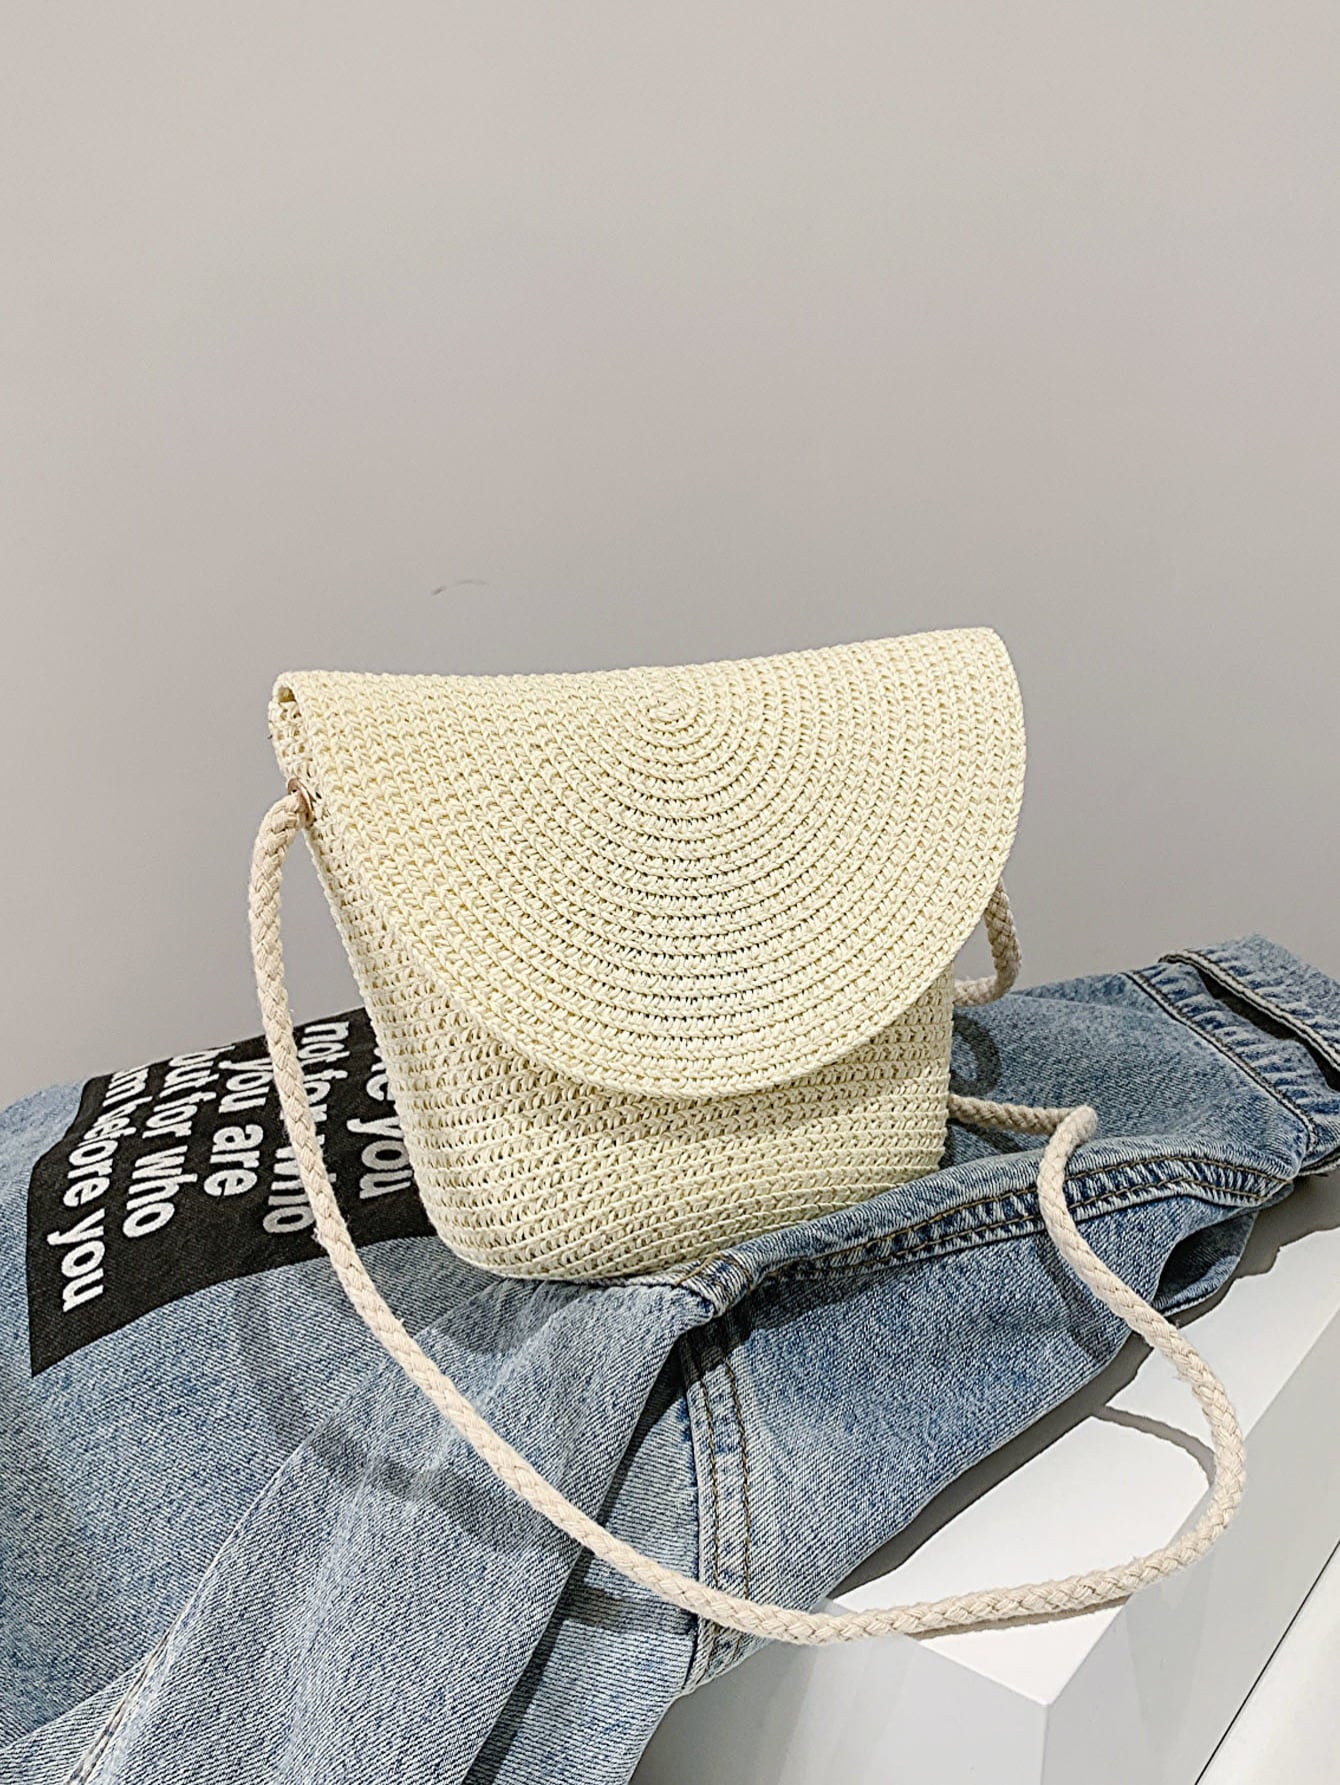 Gray Crochet Shoulder Bag Sentient Beauty Fashions Apparel & Accessories